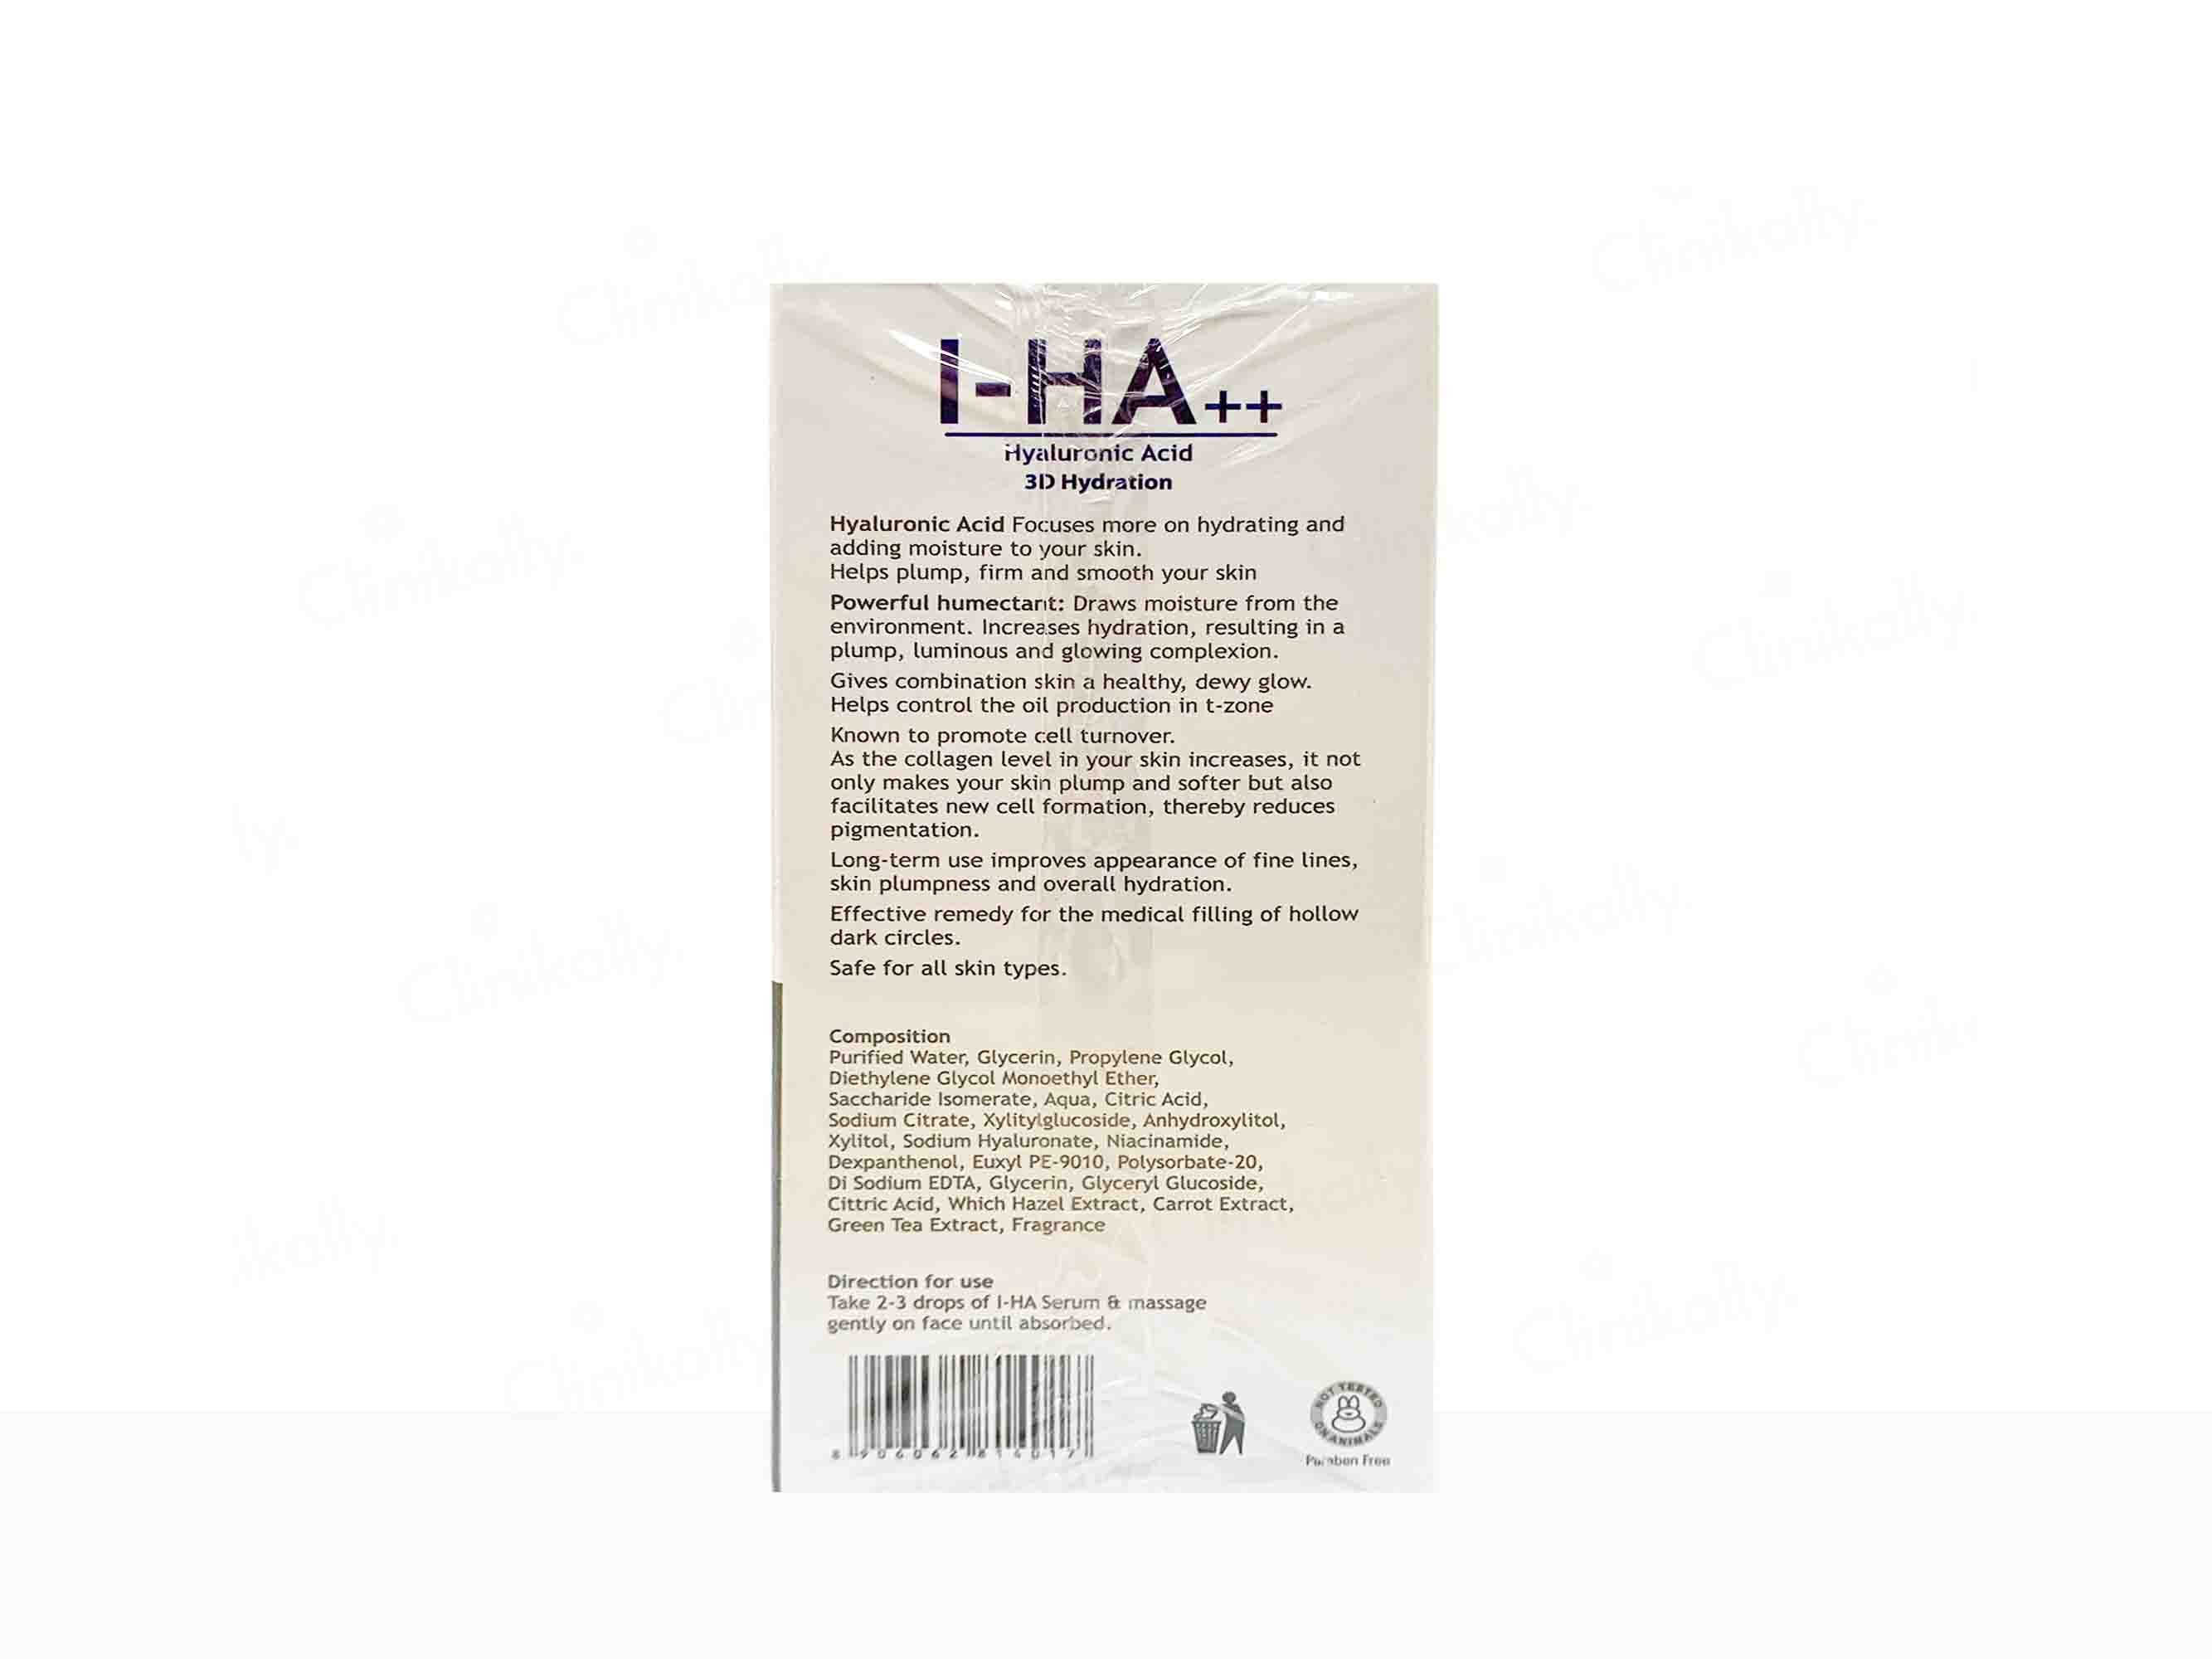 Azelia I-HA++ Hyaluronic Acid 3D Hydration Serum